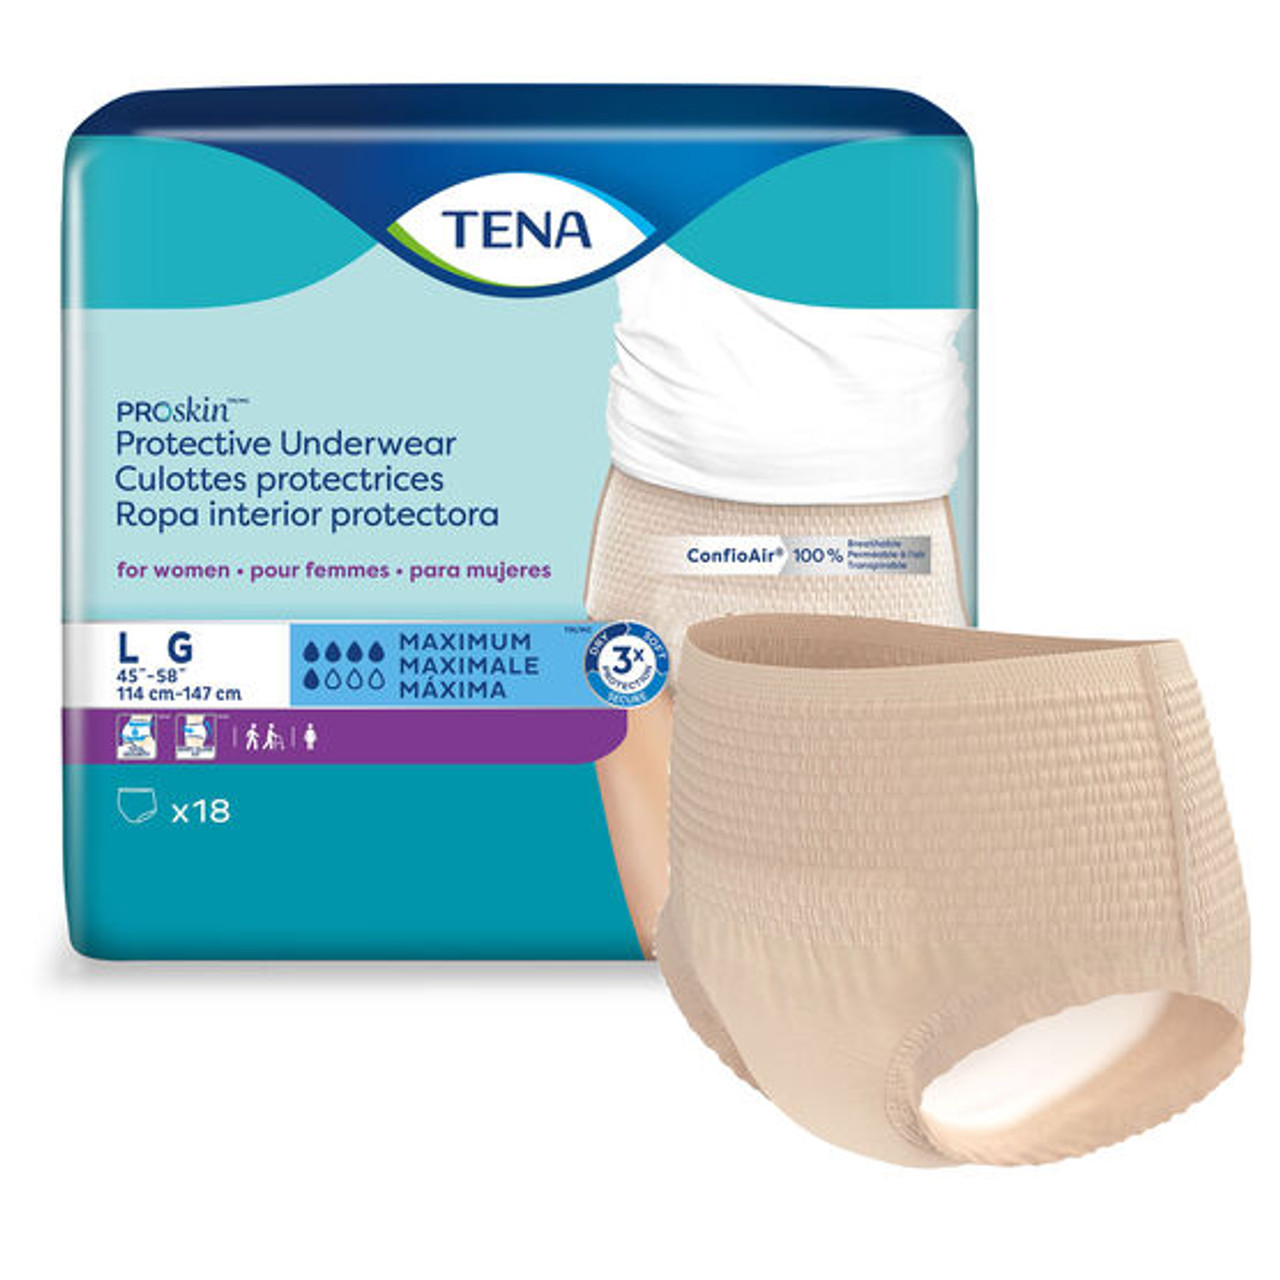 Buy Tena Pro Skin Underwear For Women Canada | AgeComfort.com